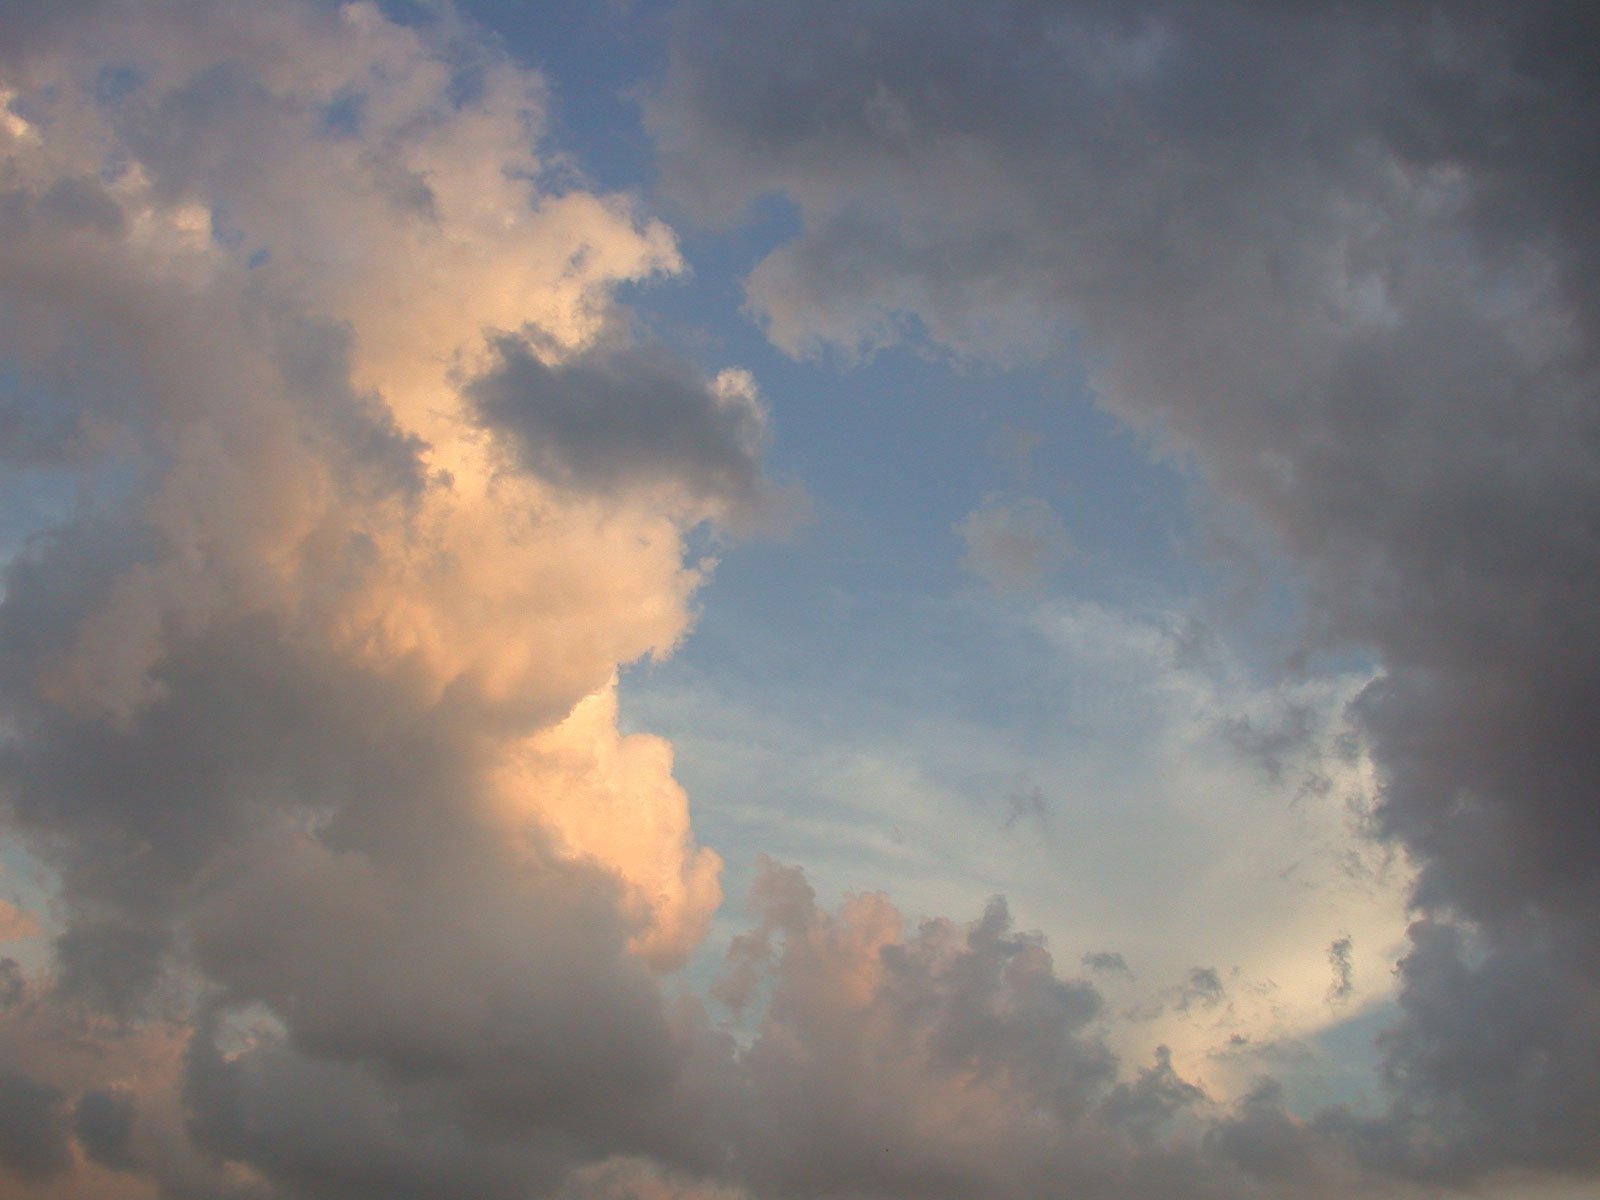 a large cloud has an overcast sky above it